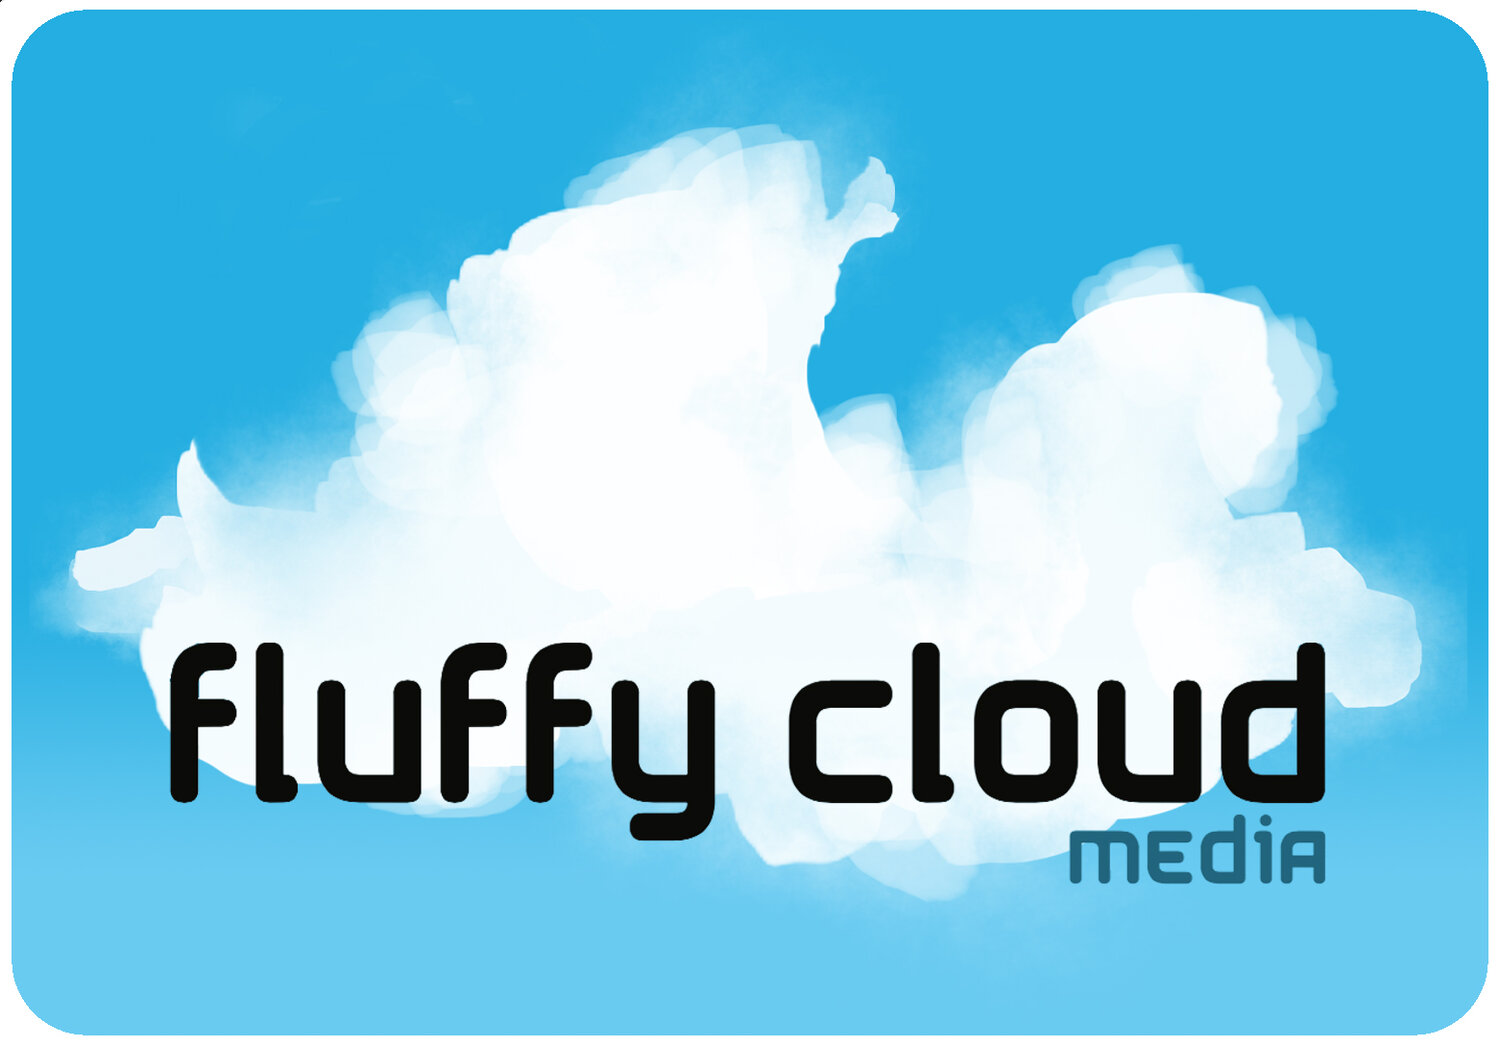 Fluffy Cloud Media Animation 